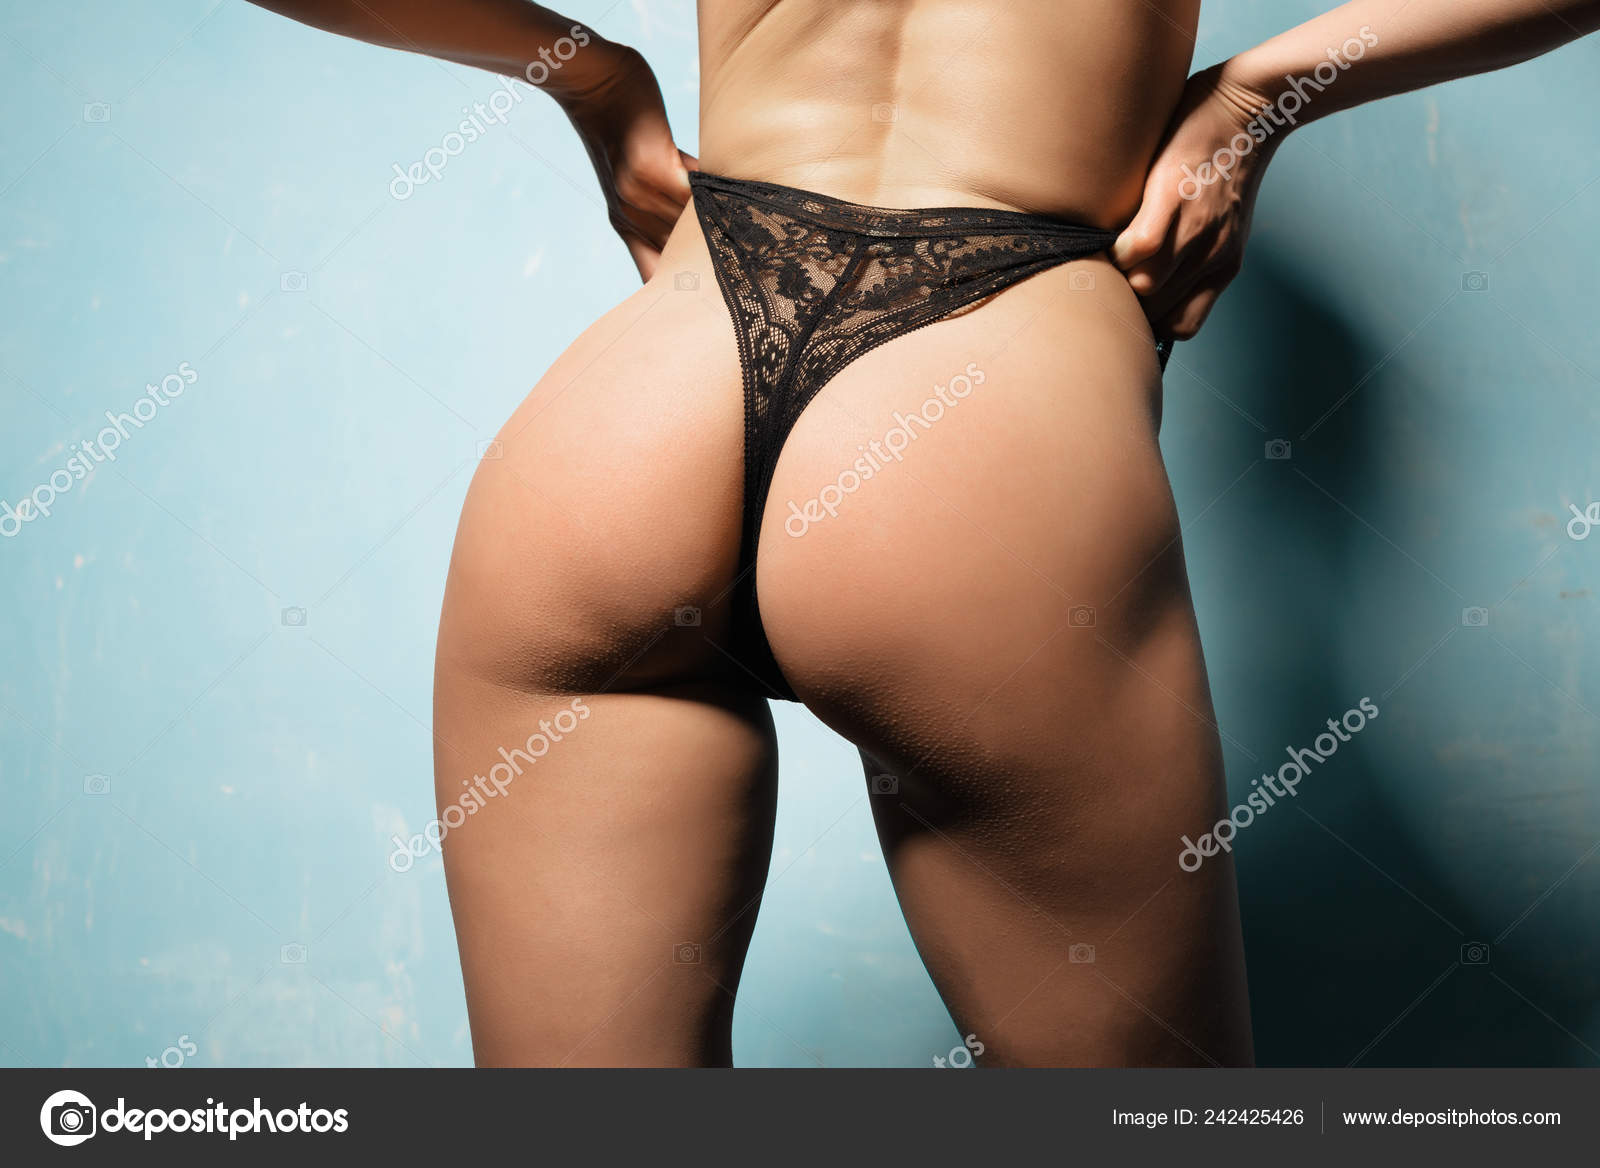 Ass black spanking - Quality porn